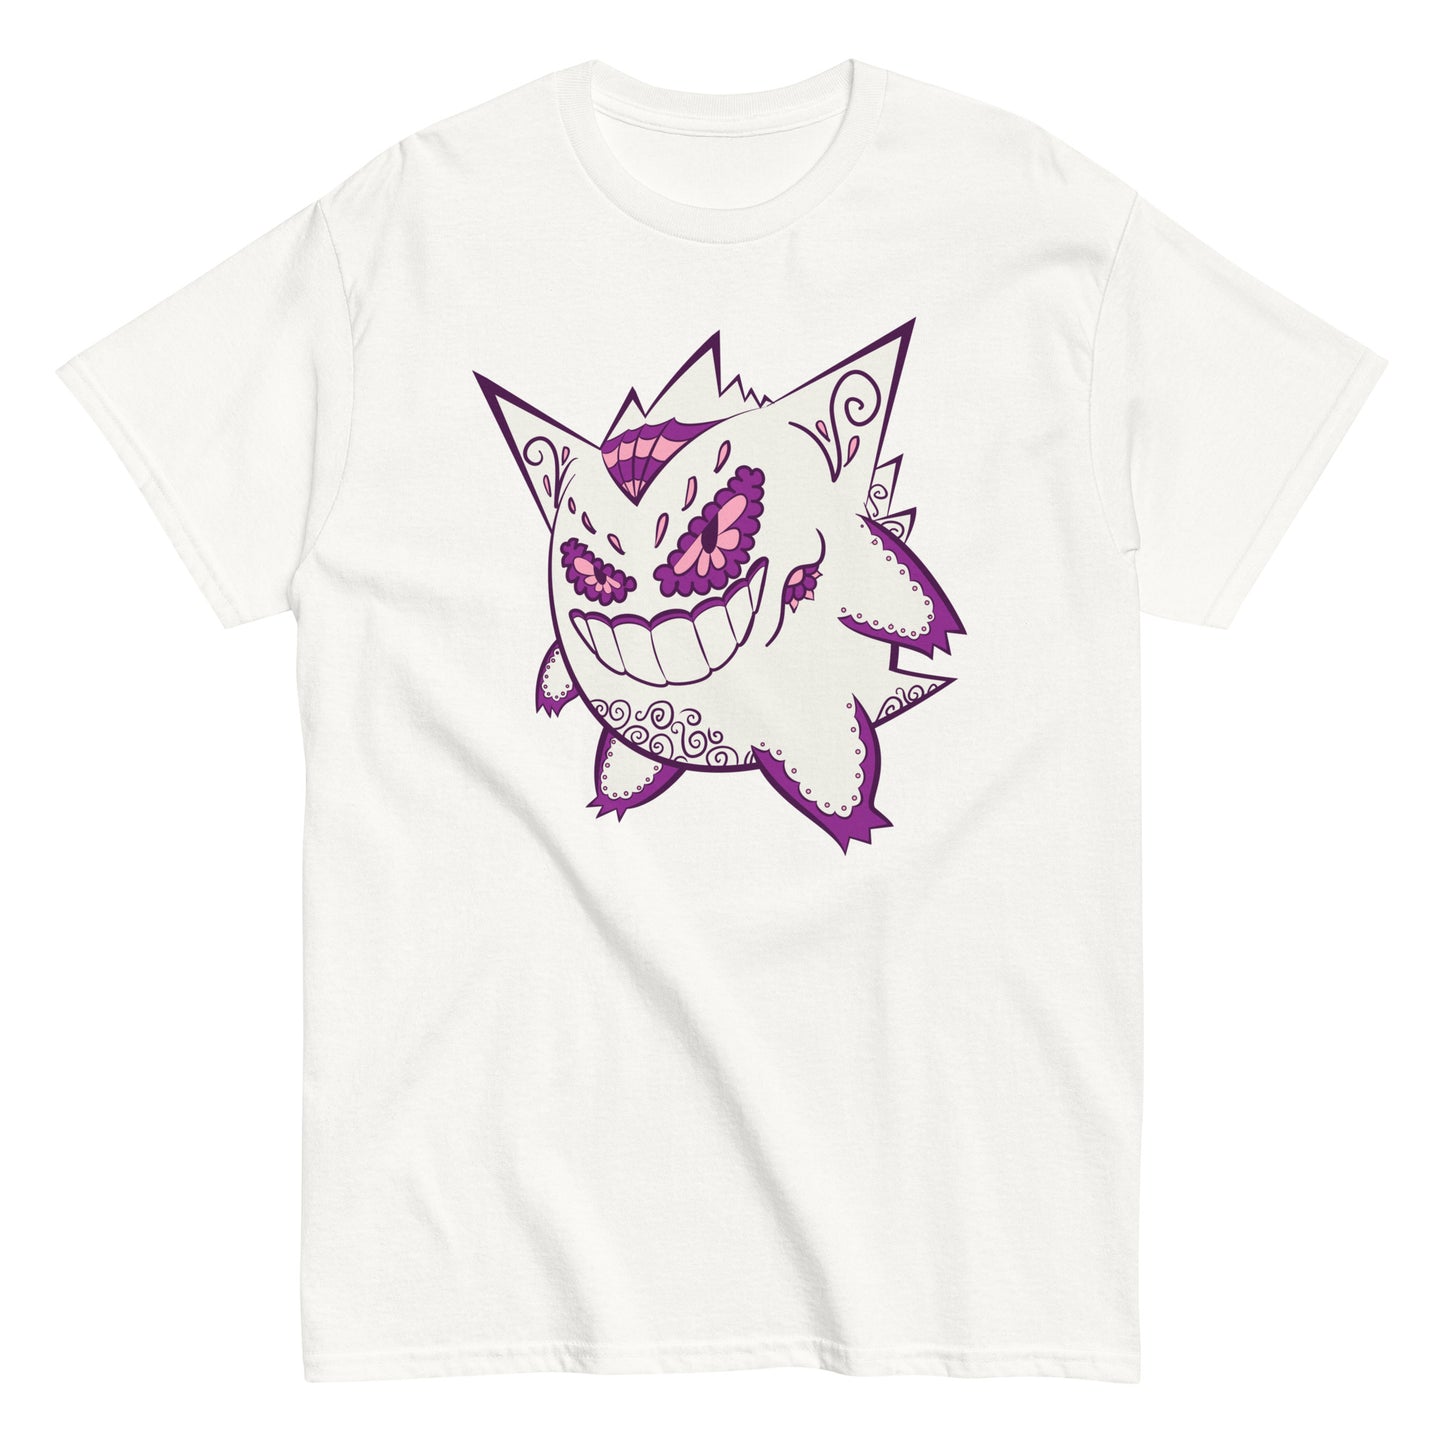 Spiky Purple T-Shirt